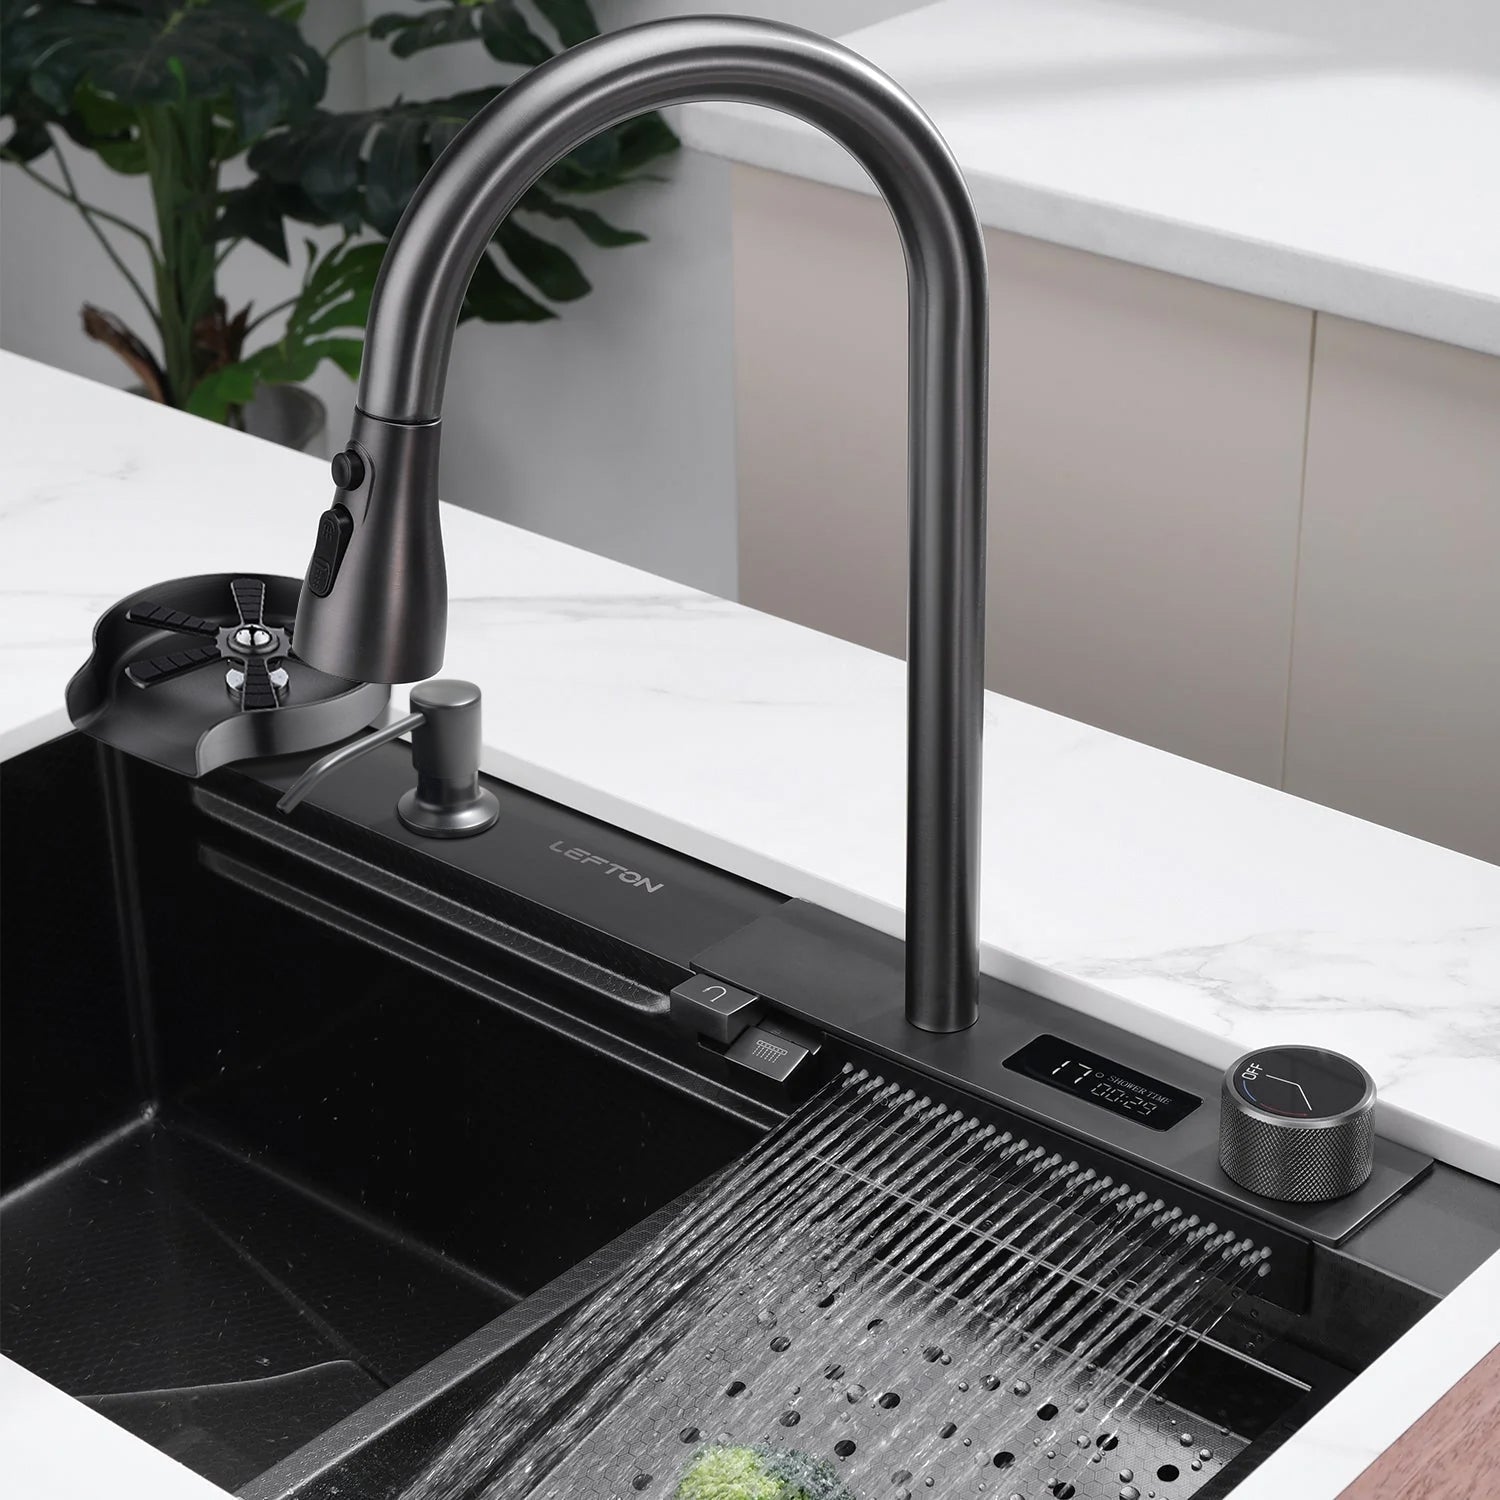 Lefton Waterfall Workstation Kitchen Sink Set With Digital Temperature Display-KS2204 -Kitchen Sinks- Lefton Home